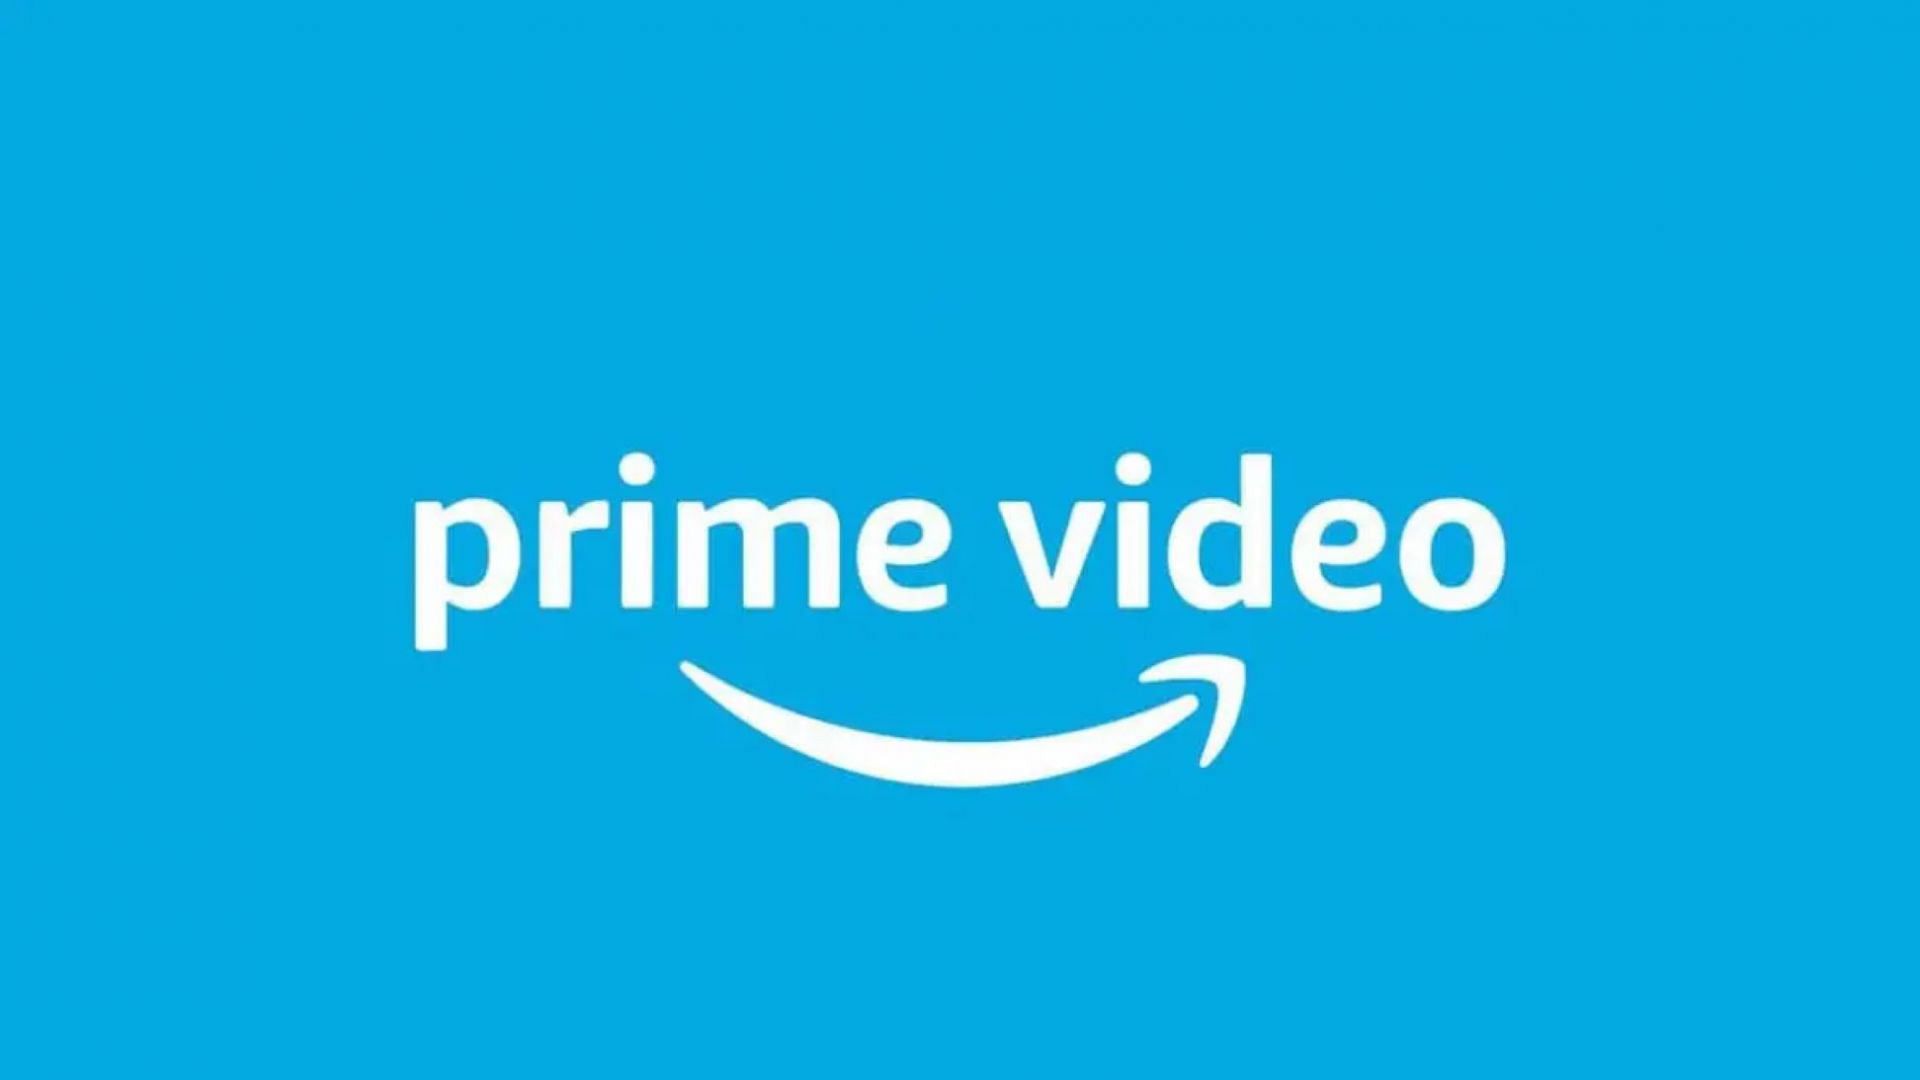 Amazon Prime Video logo (Image via Amazon)